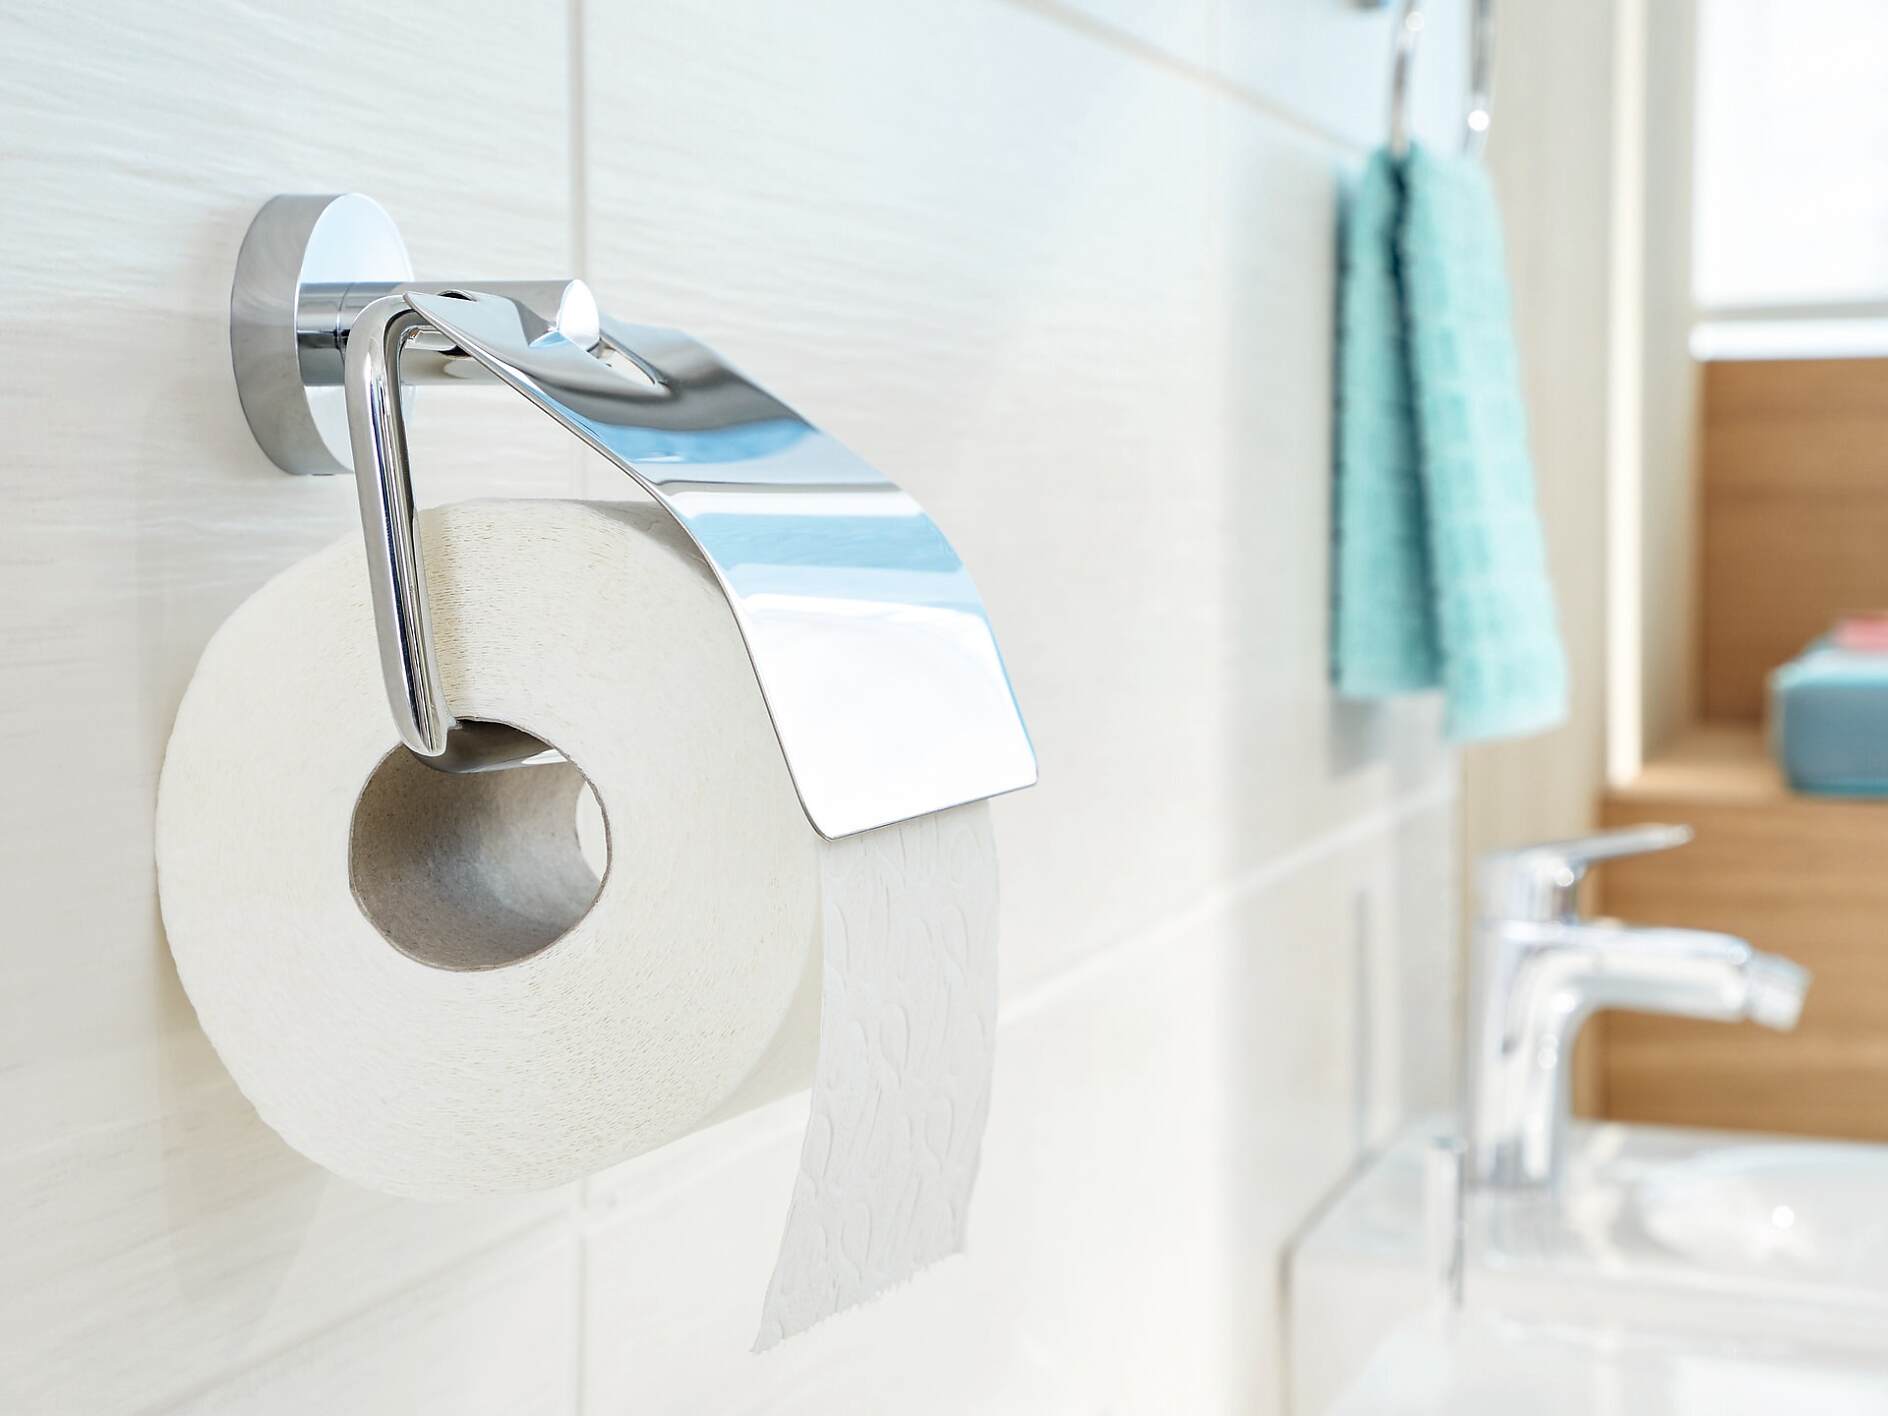 KALKGRUND Toilet roll holder, chrome plated - IKEA